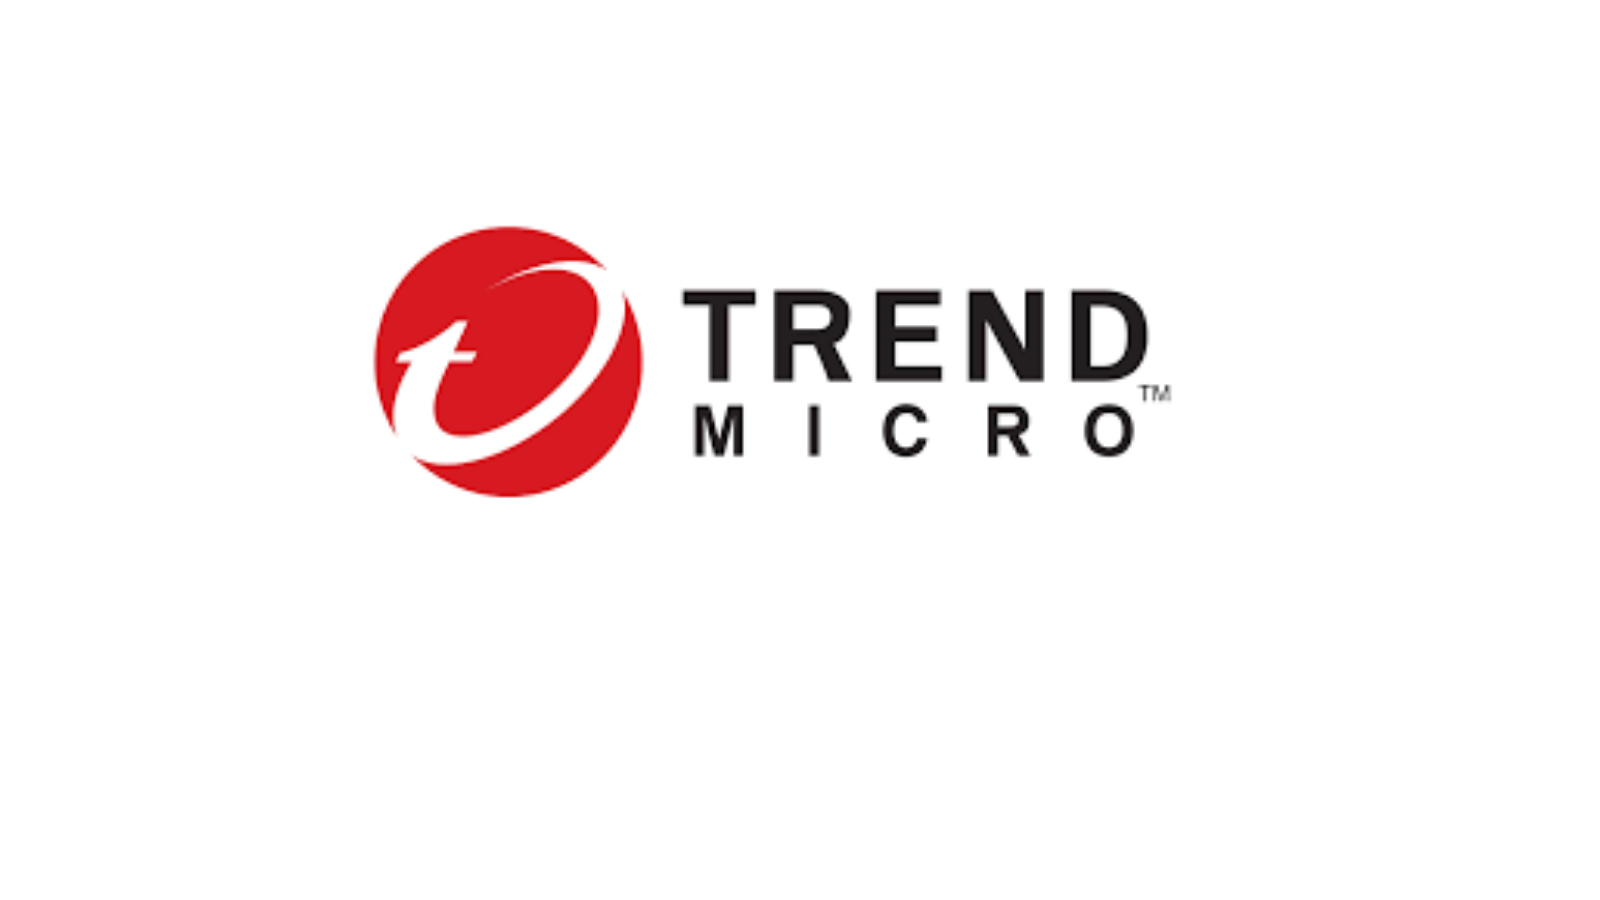 Trend Micro Logo Edited